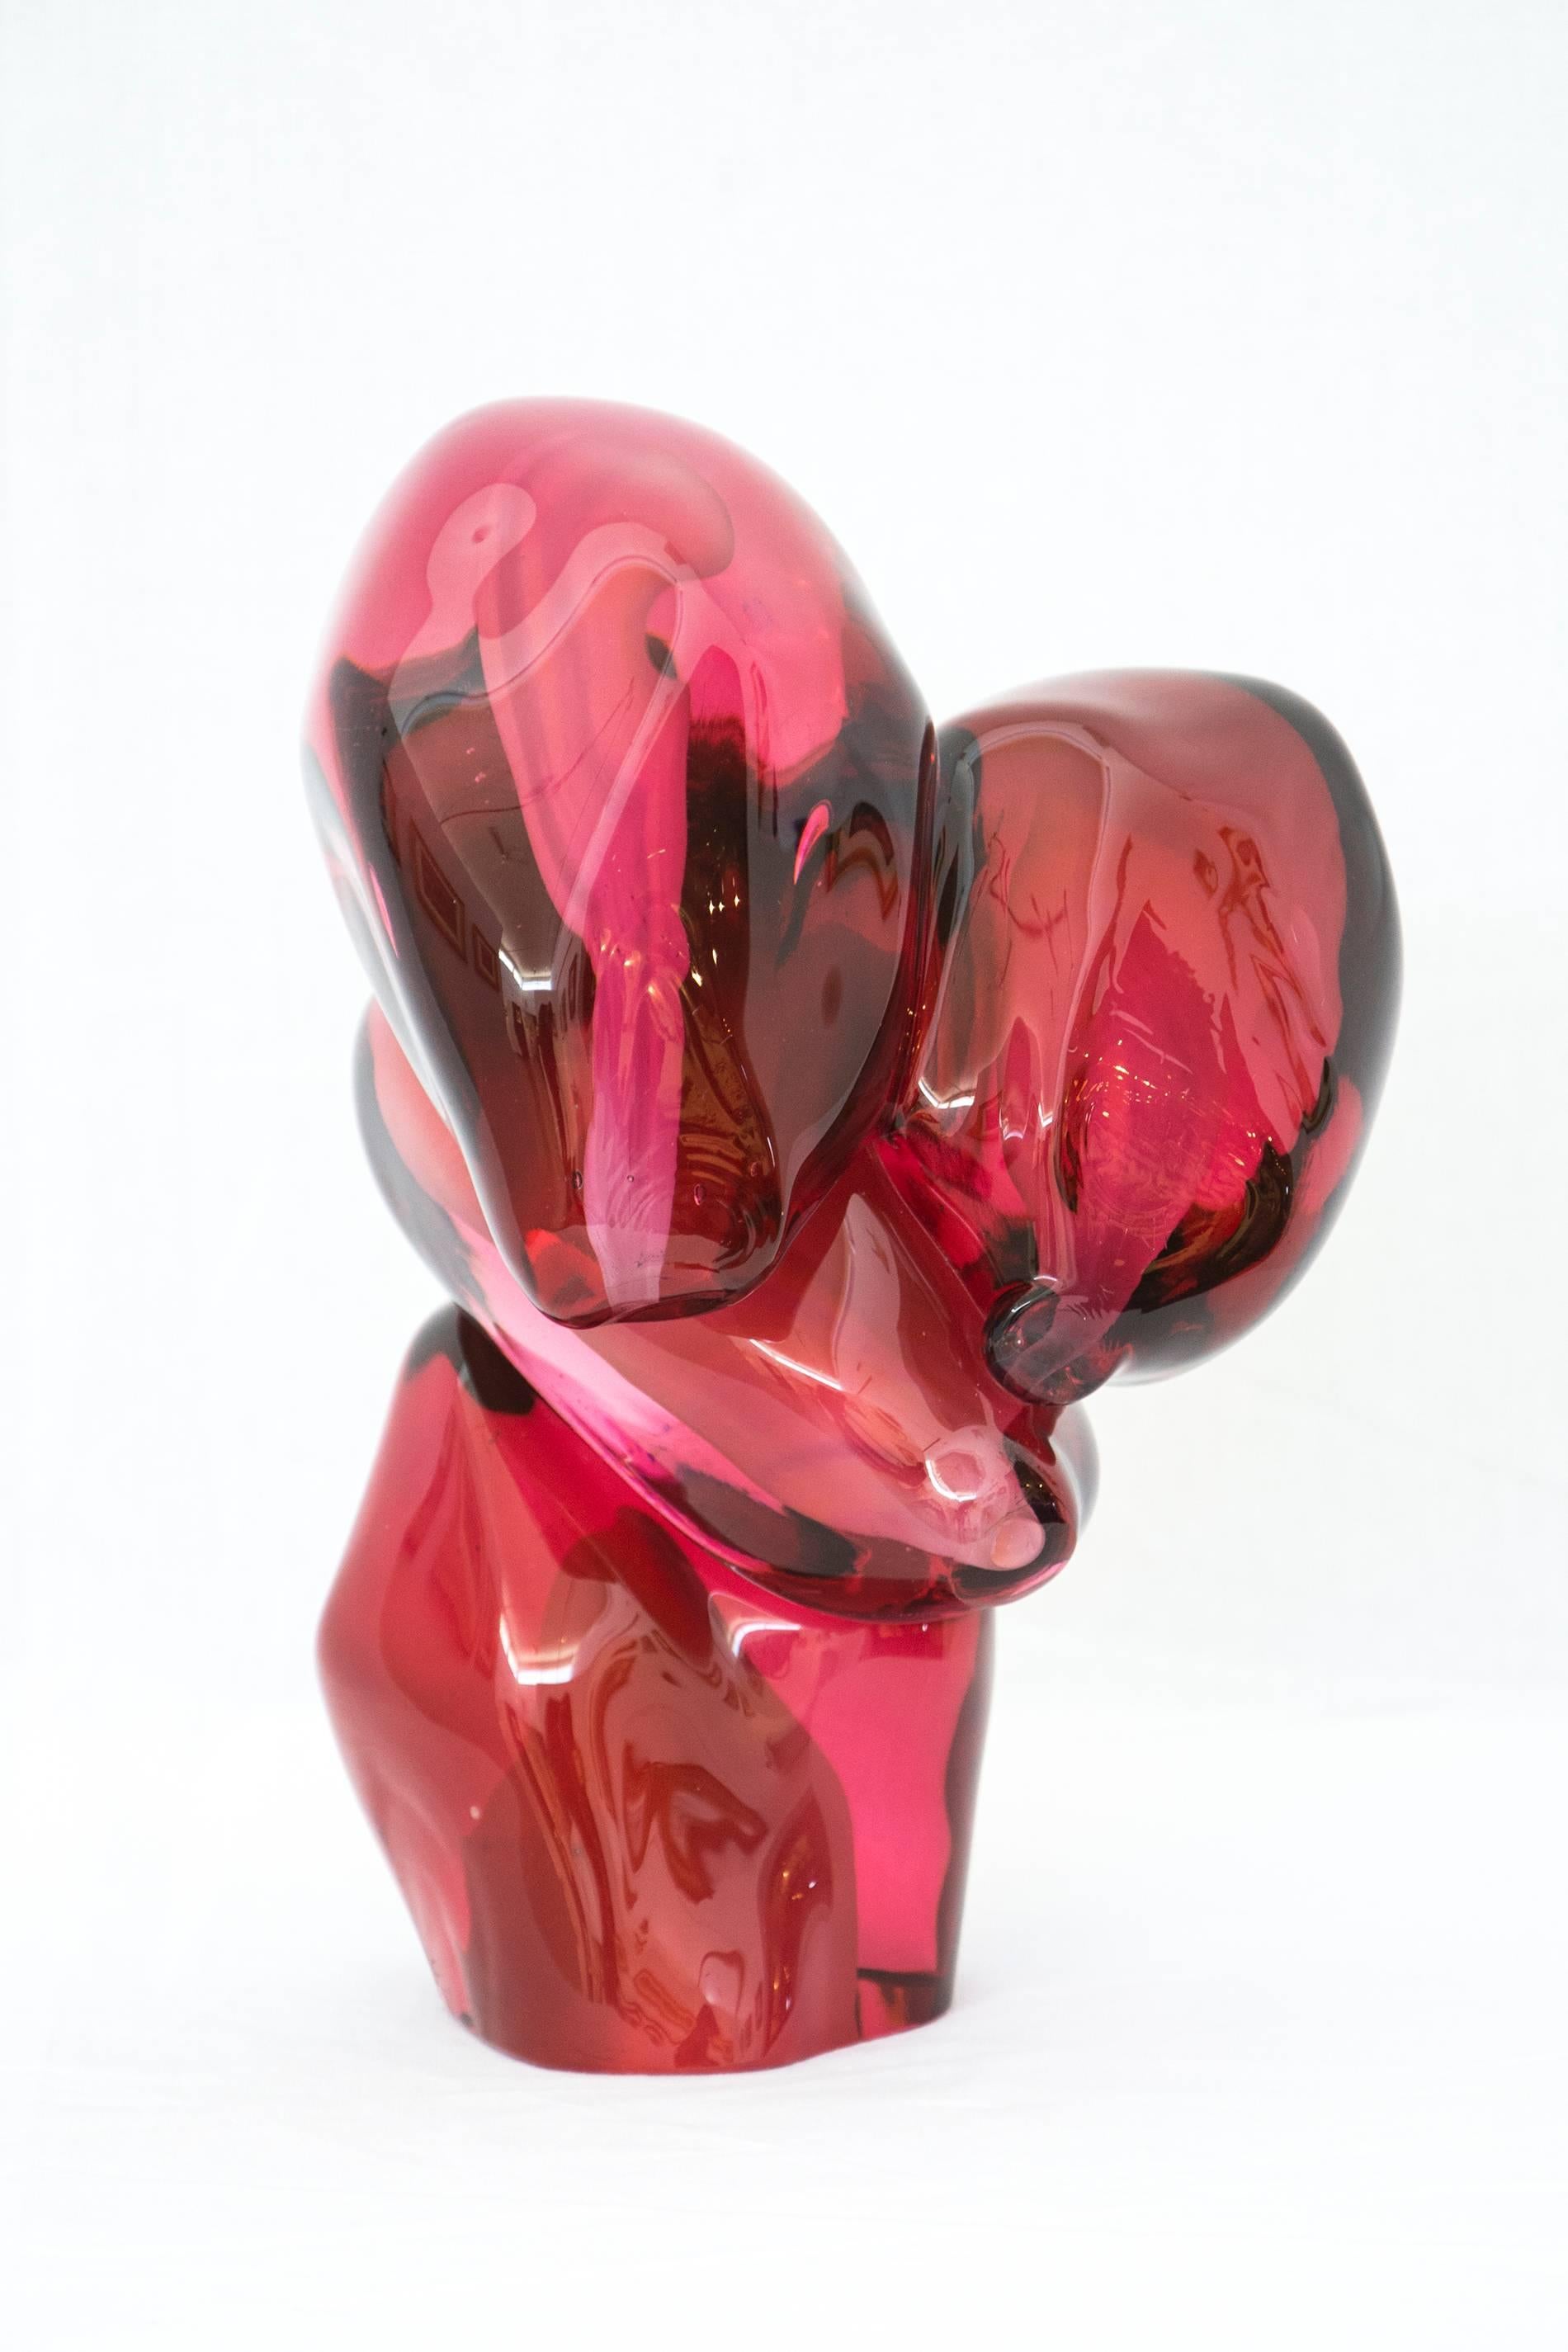 Pomegranate Seeds Raised - Sculpture by Catherine Vamvakas Lay